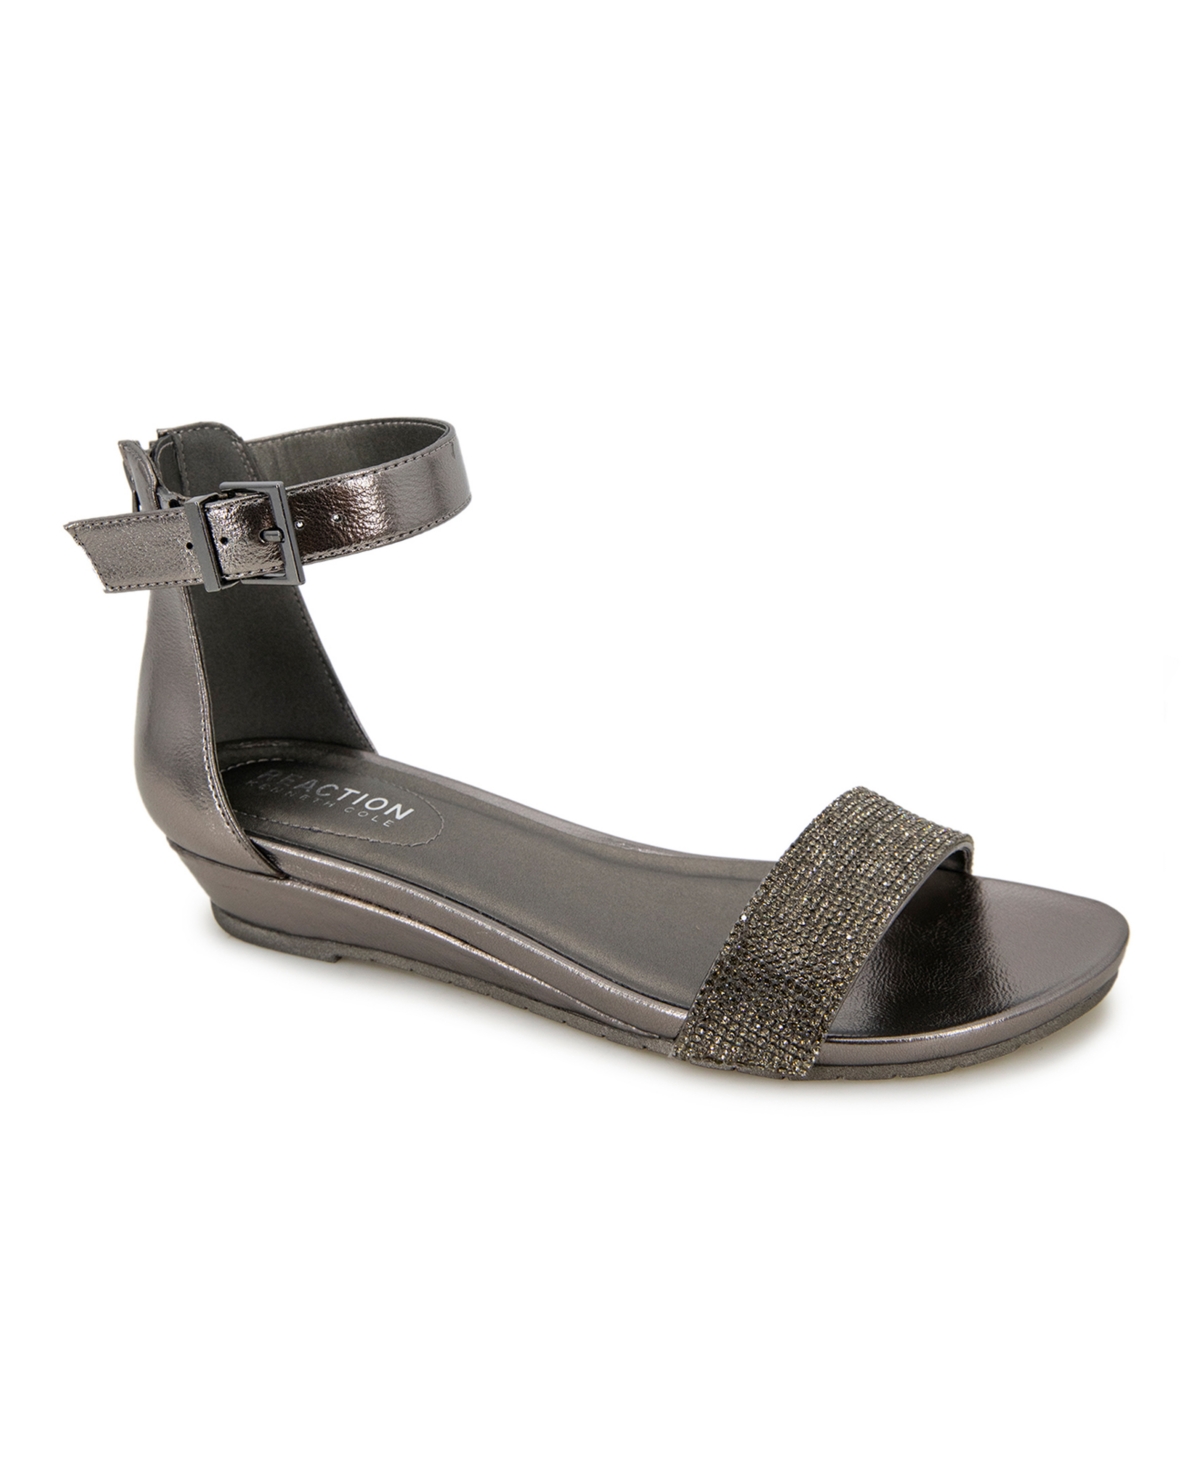 Women's Great Viber Jewel Wedge Sandals - Pewter